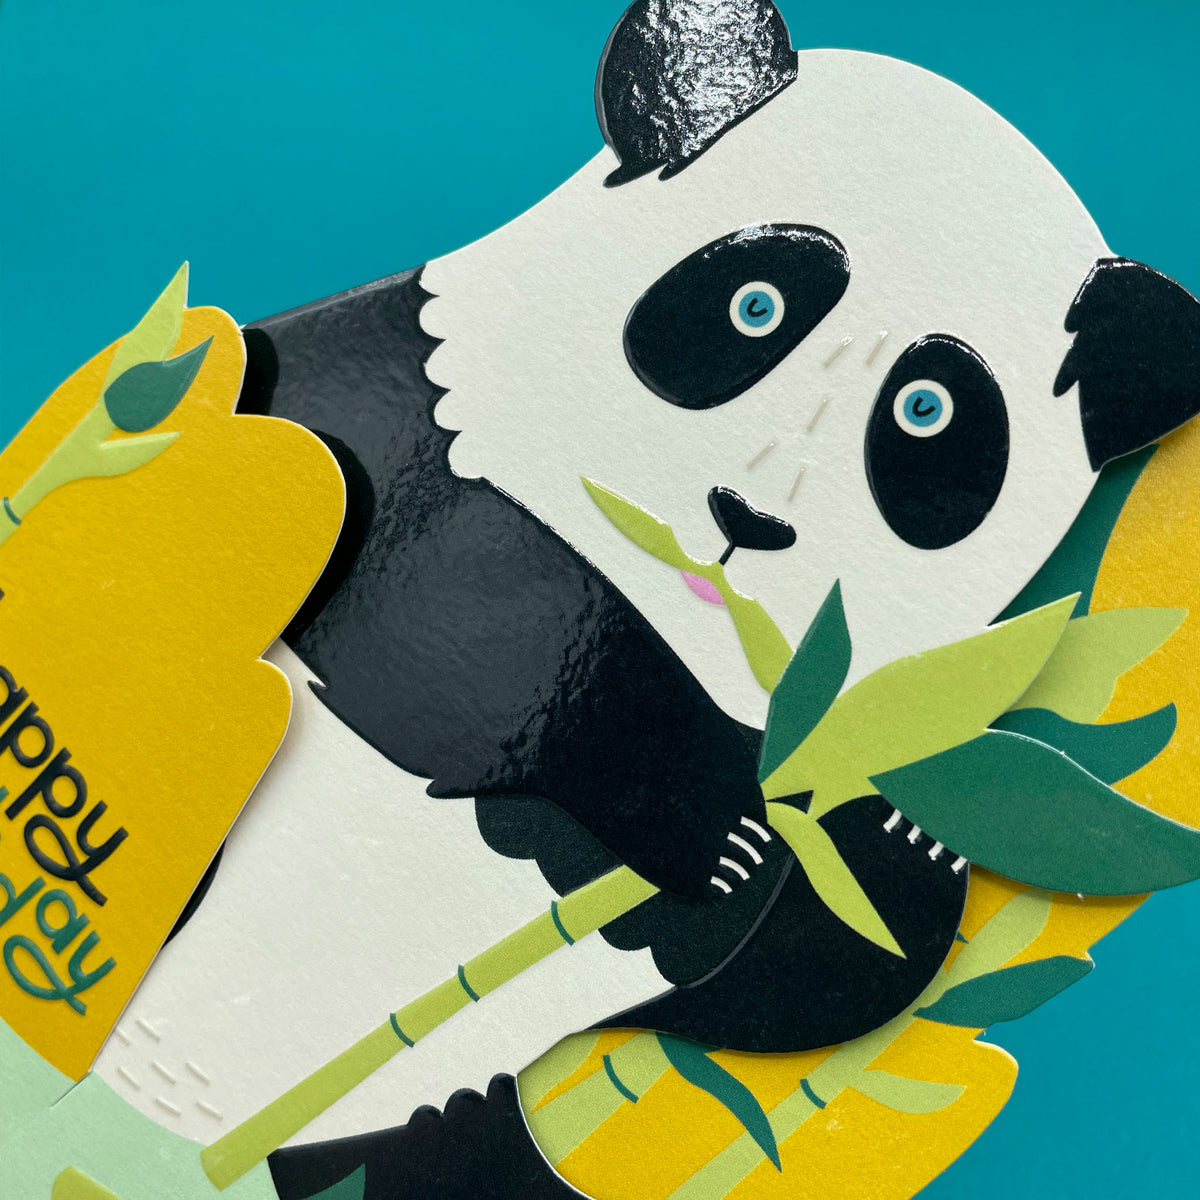 3D Fold-out Panda Raspberry Blossom Birthday Card